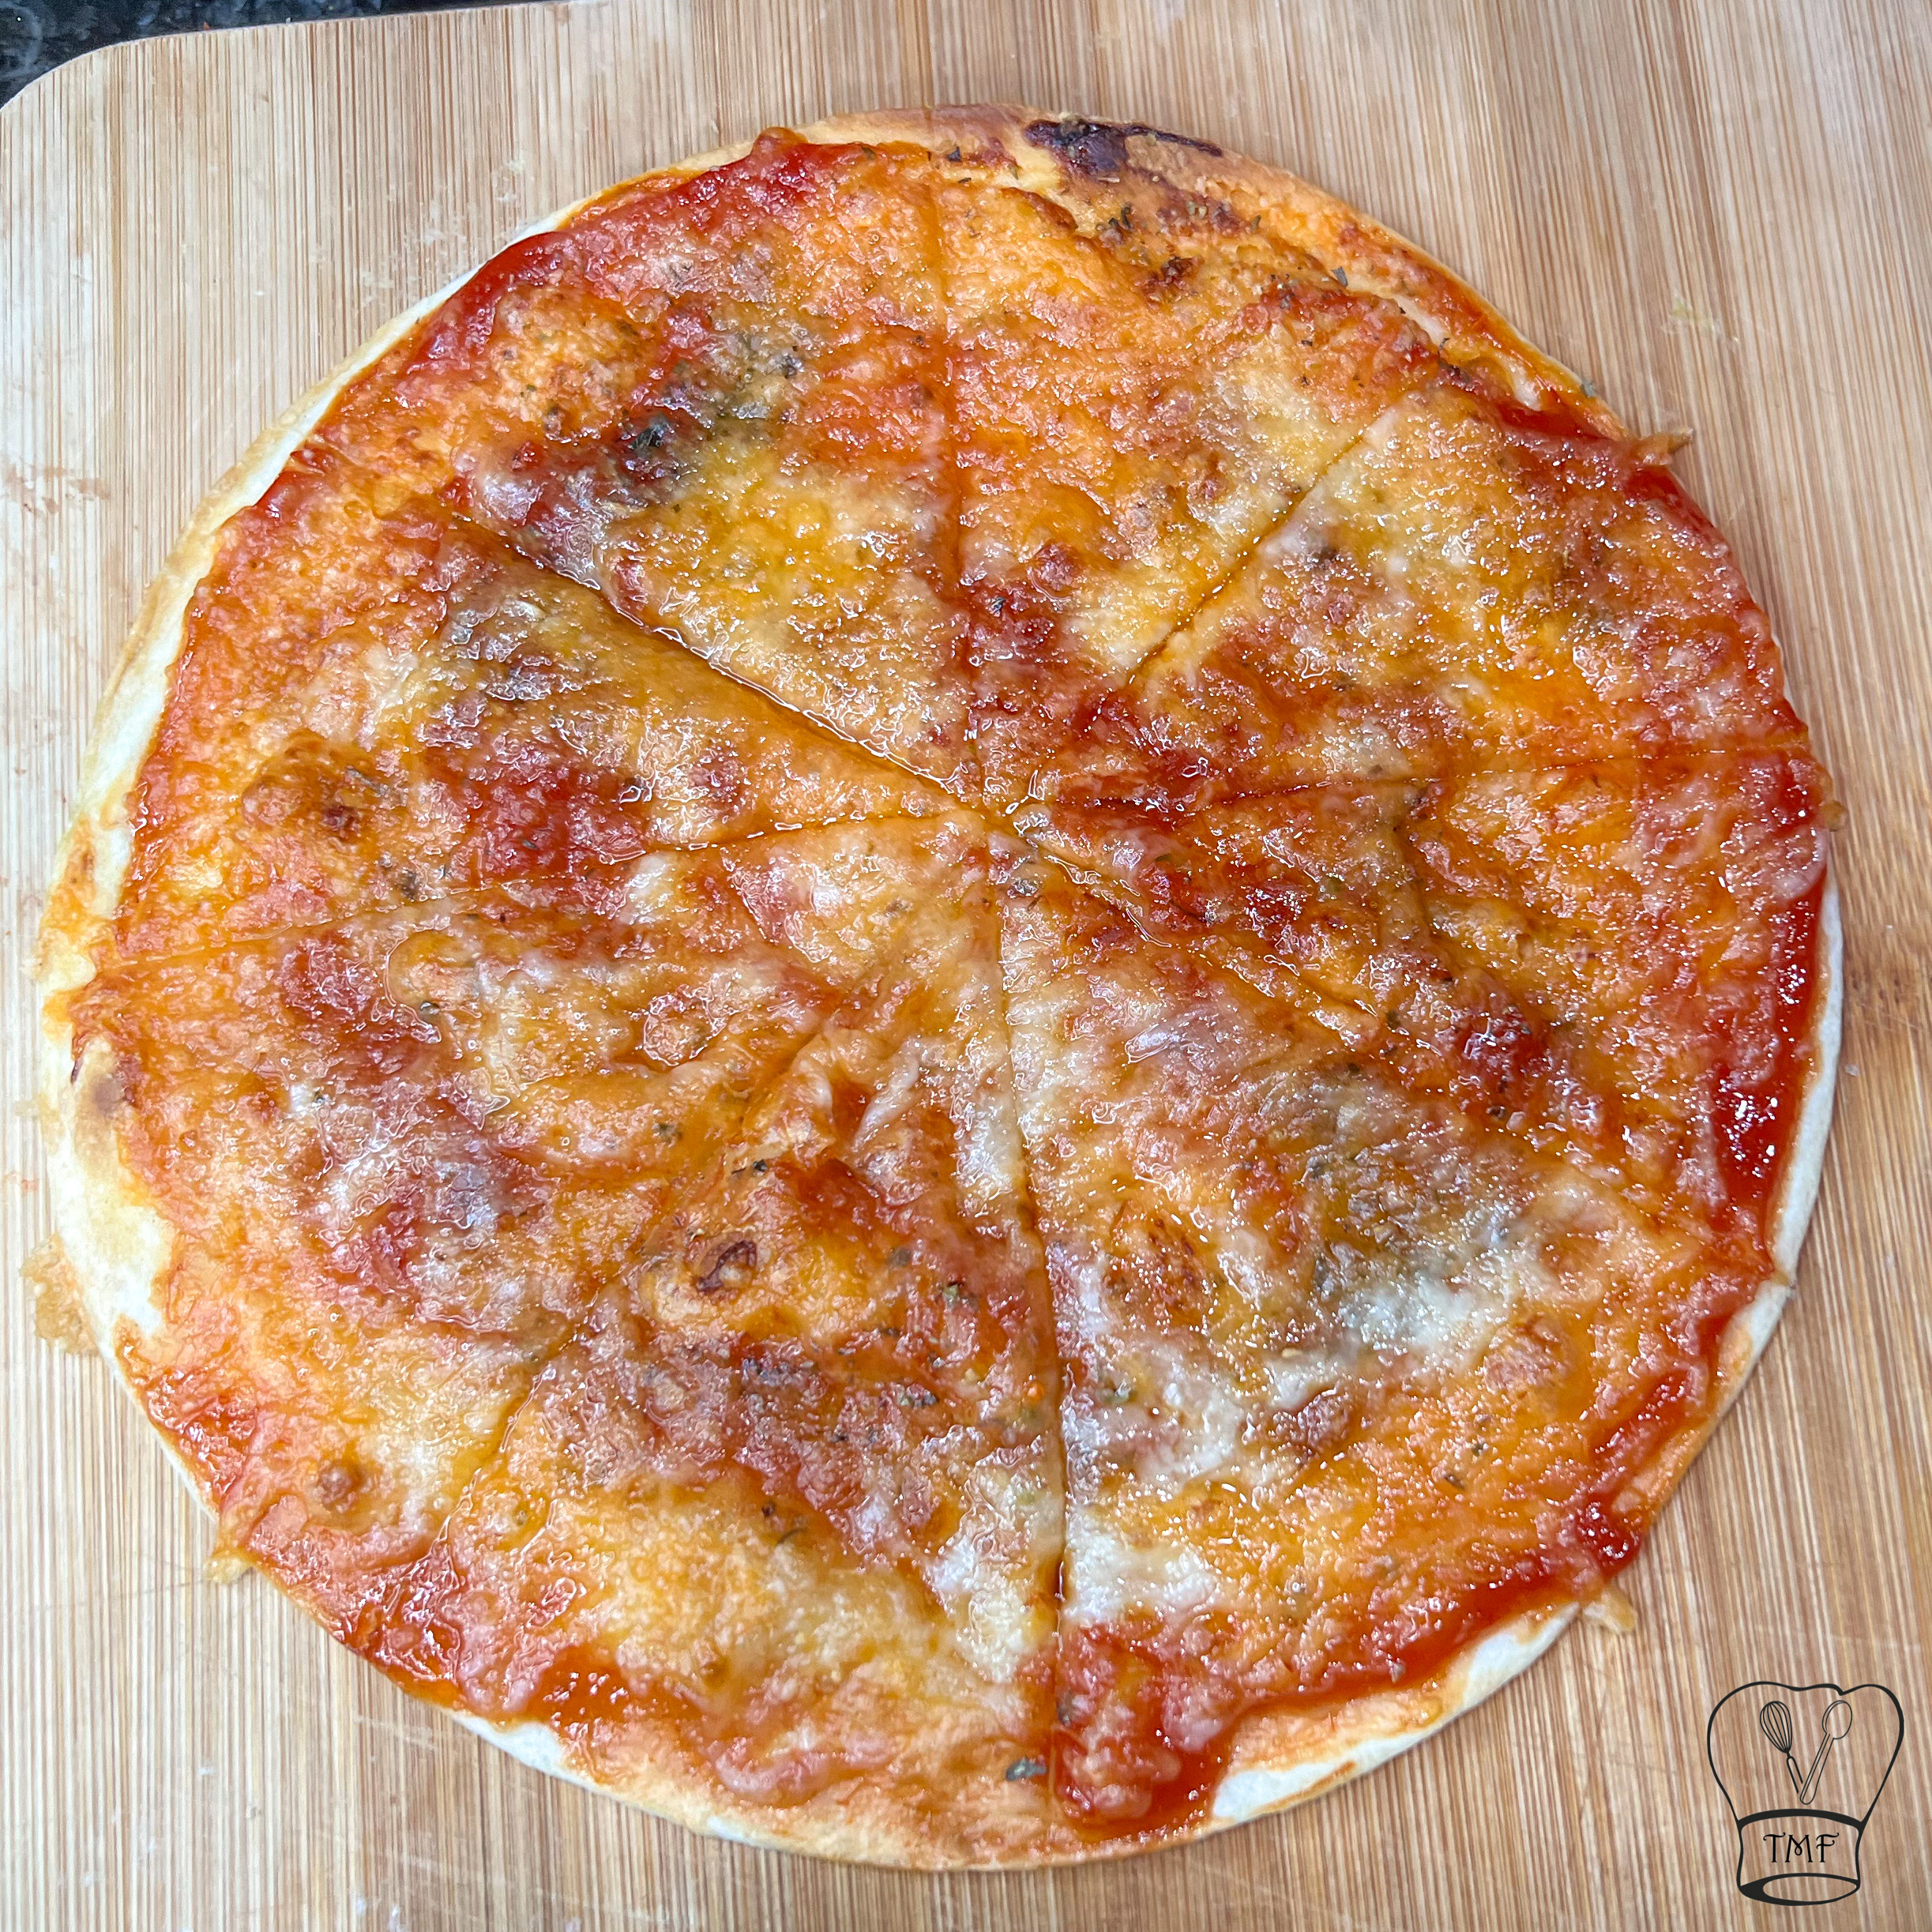 https://traditionallymodernfood.com/wp-content/uploads/2022/11/tortilla-pizza-crispy-restaurant-style-pizza-1.jpeg